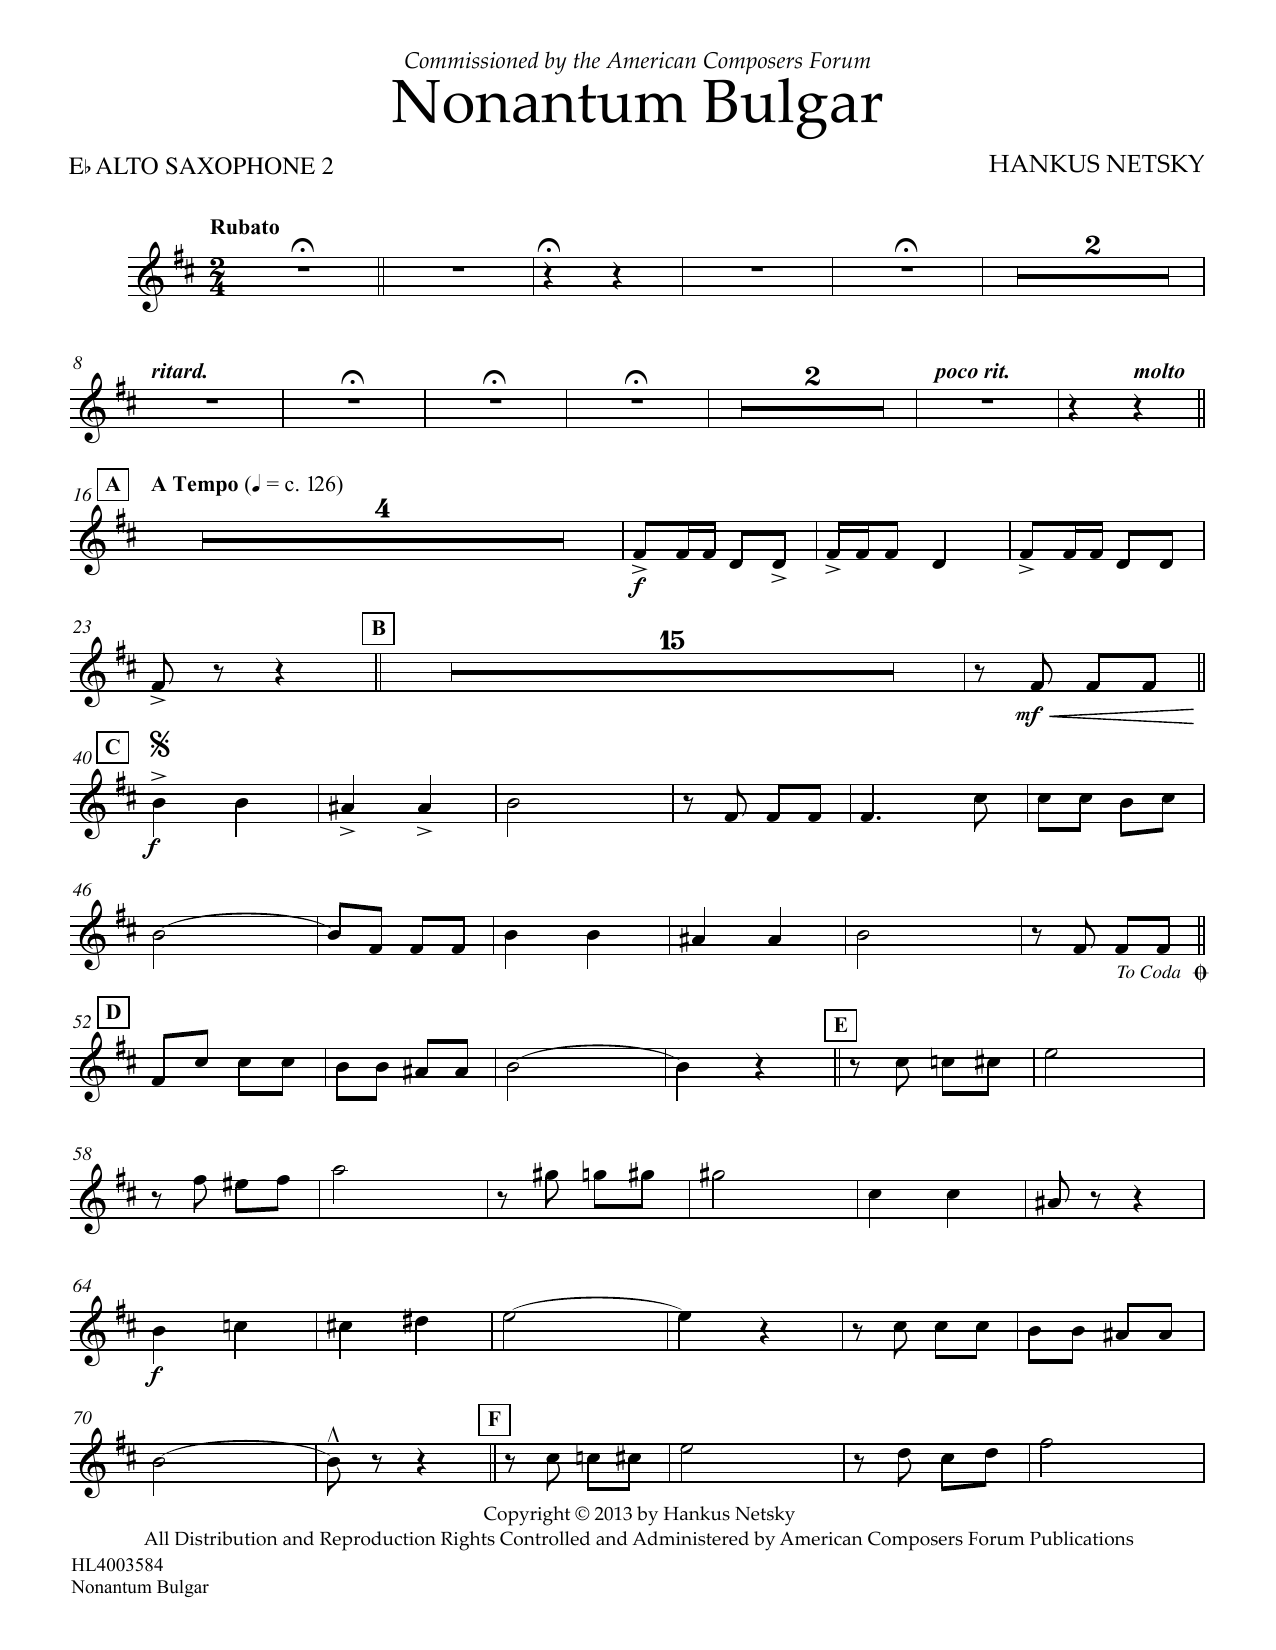 Hankus Netsky Nonantum Bulgar - Eb Alto Saxophone 2 Sheet Music Notes & Chords for Concert Band - Download or Print PDF